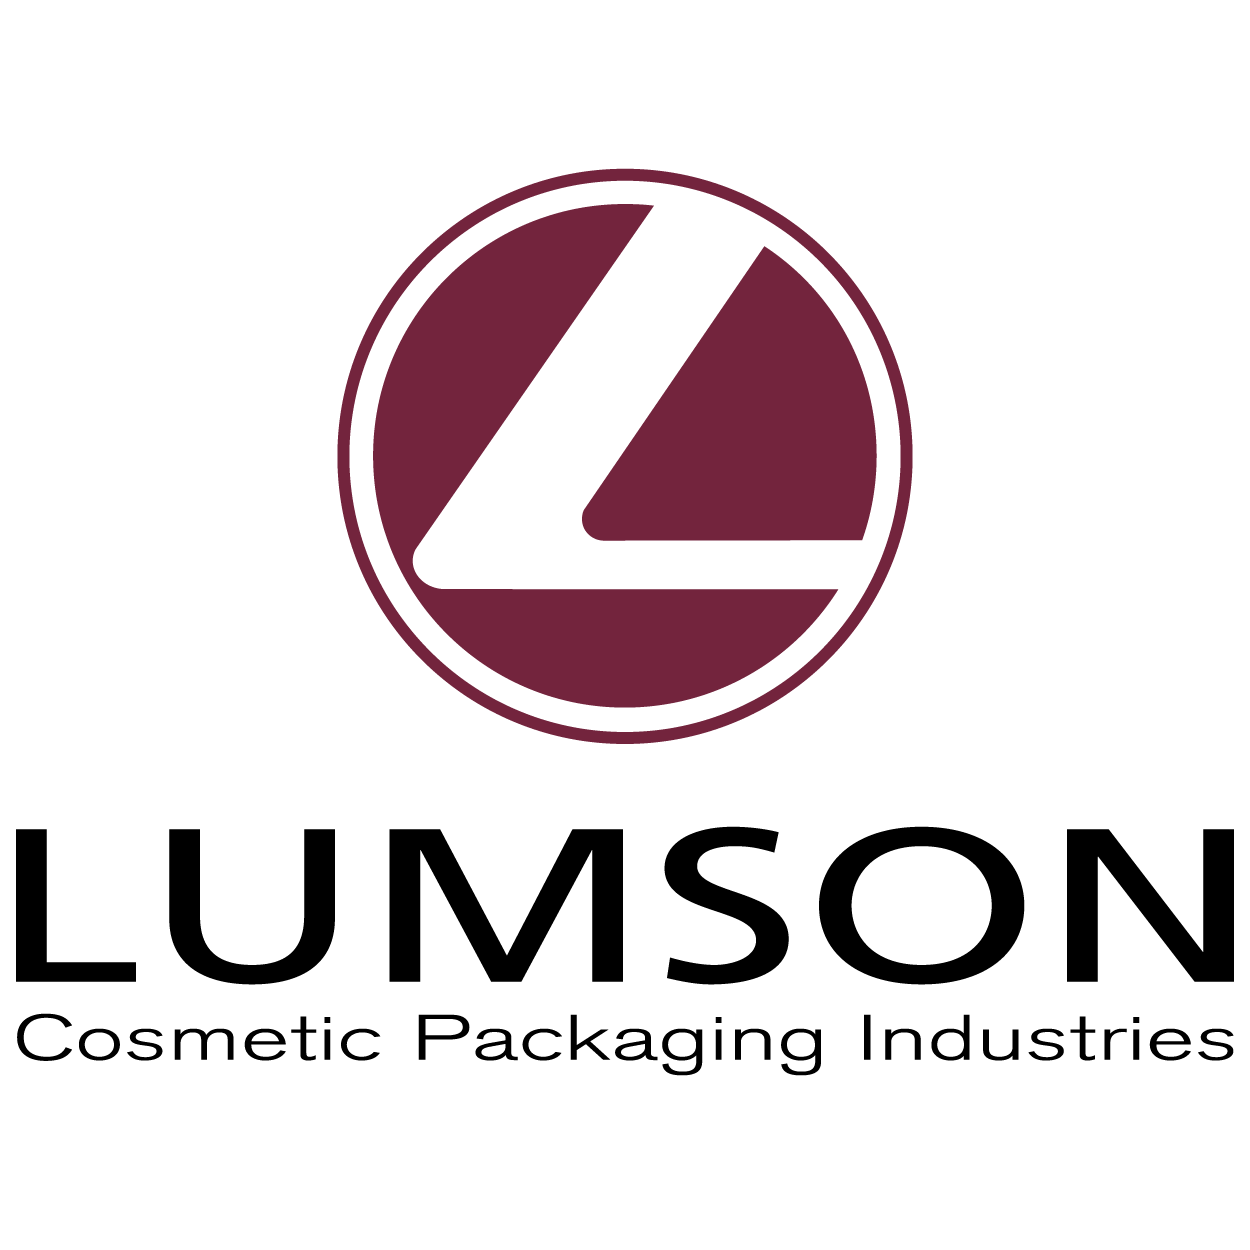 Lumson Group